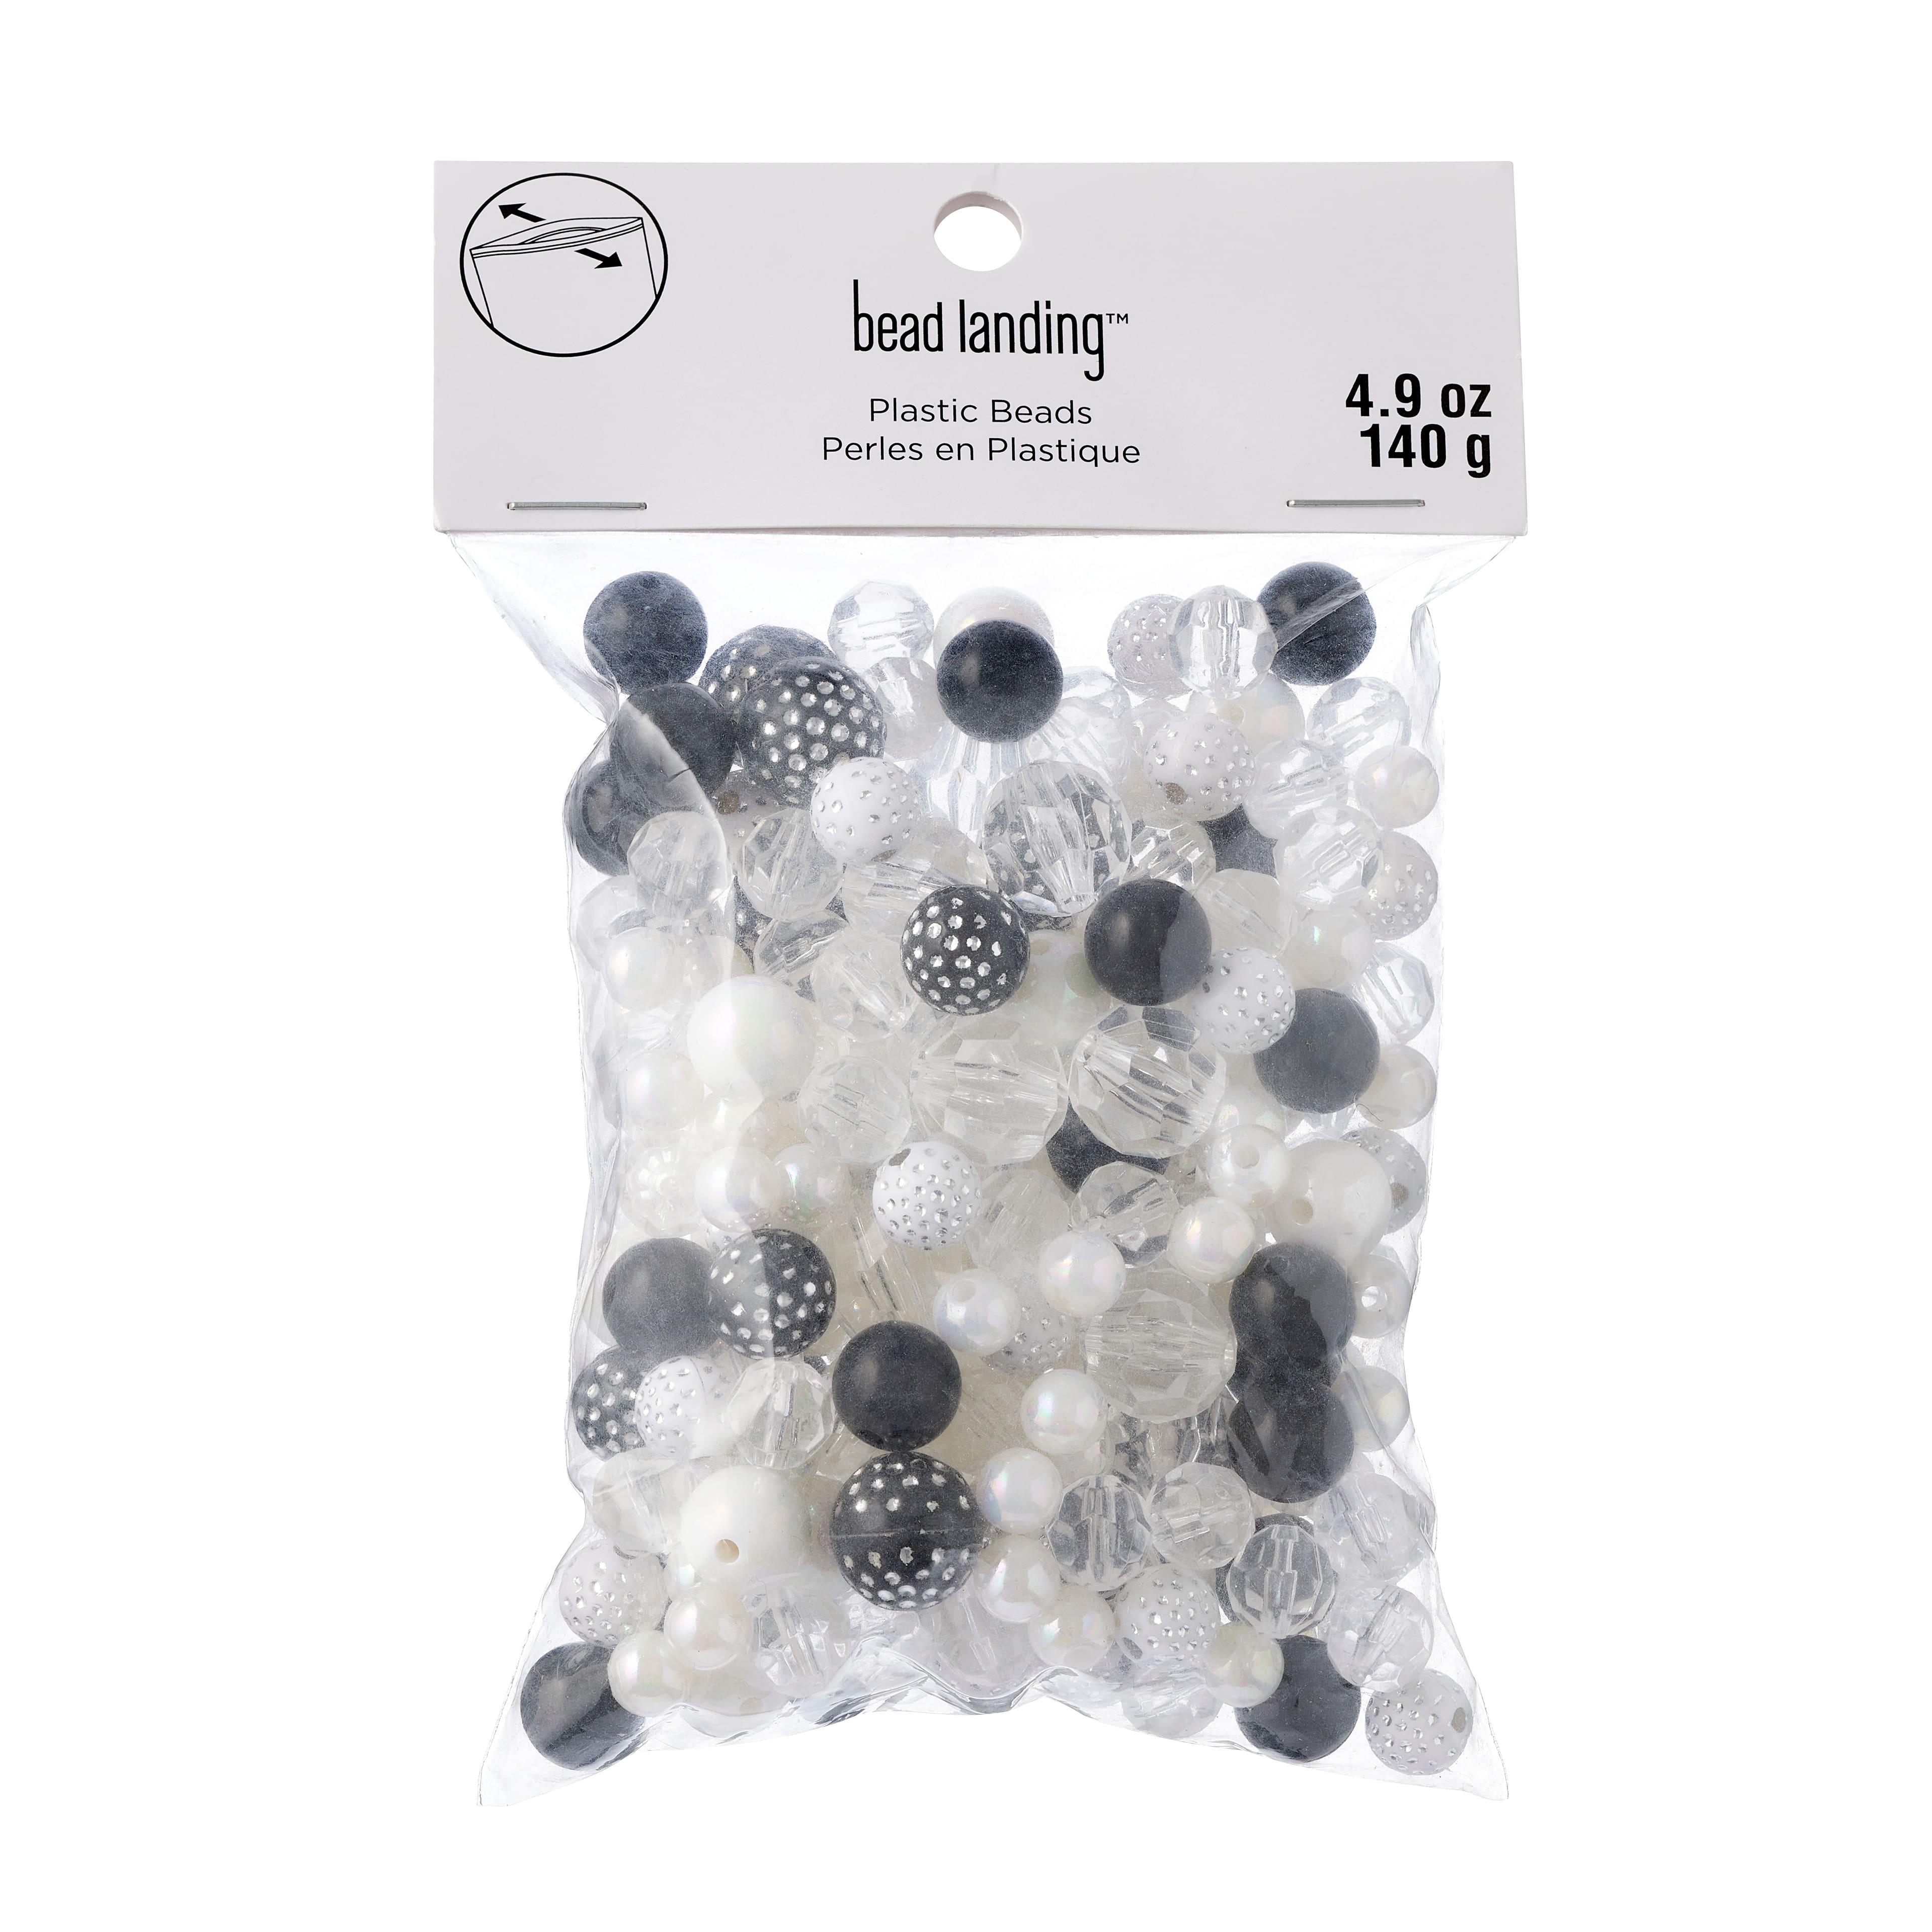 Beautiful beads $5 one bag – My Store